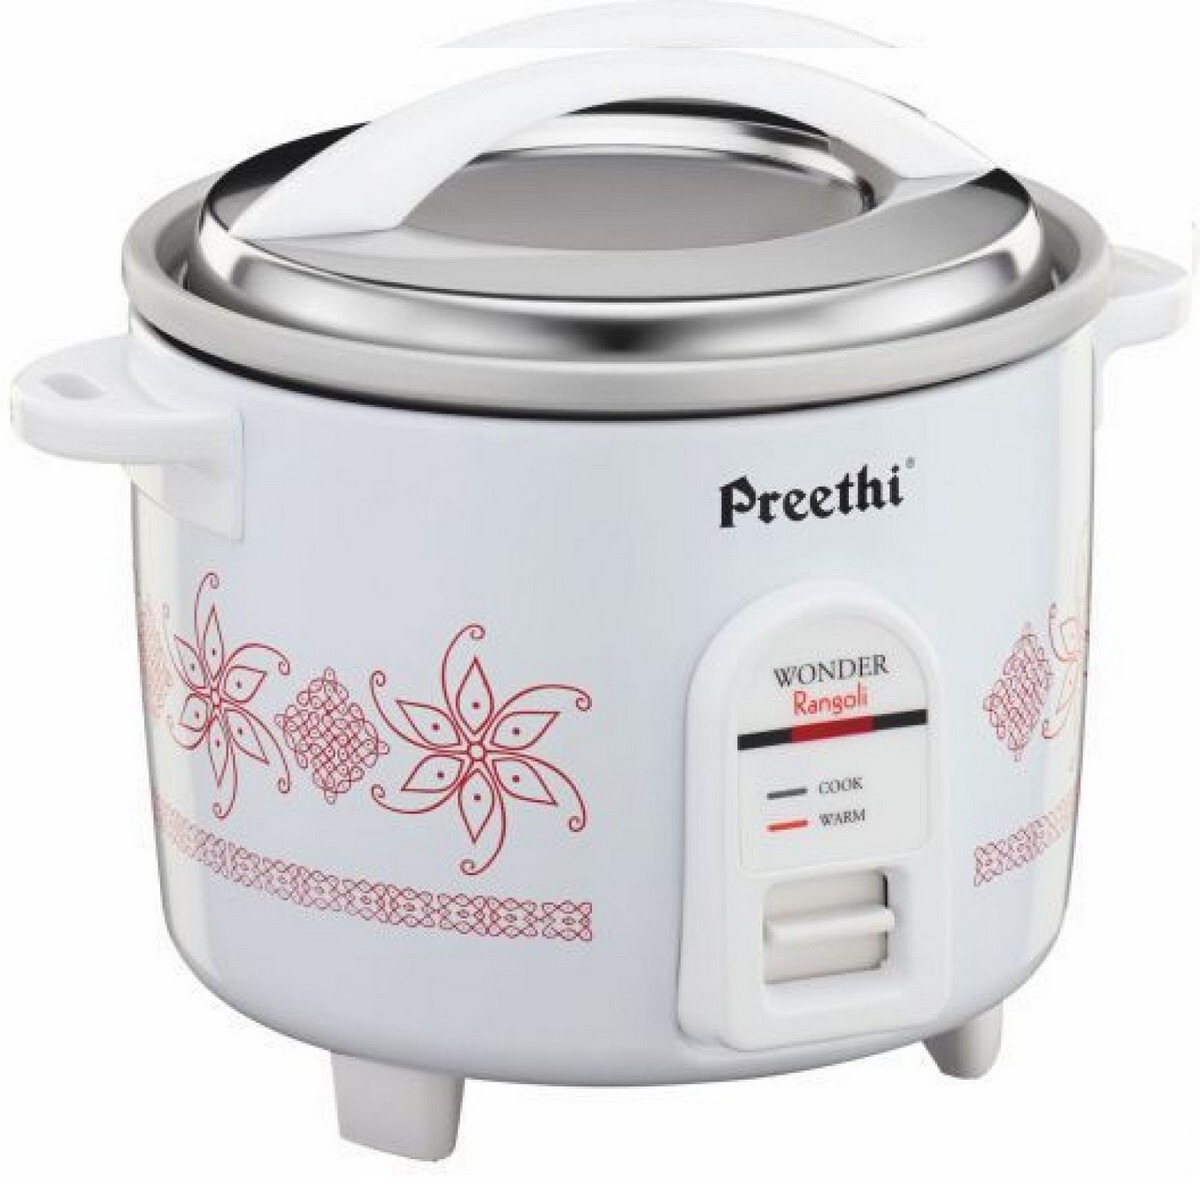 Preethi Electric Cooker Rengoli 2.2L